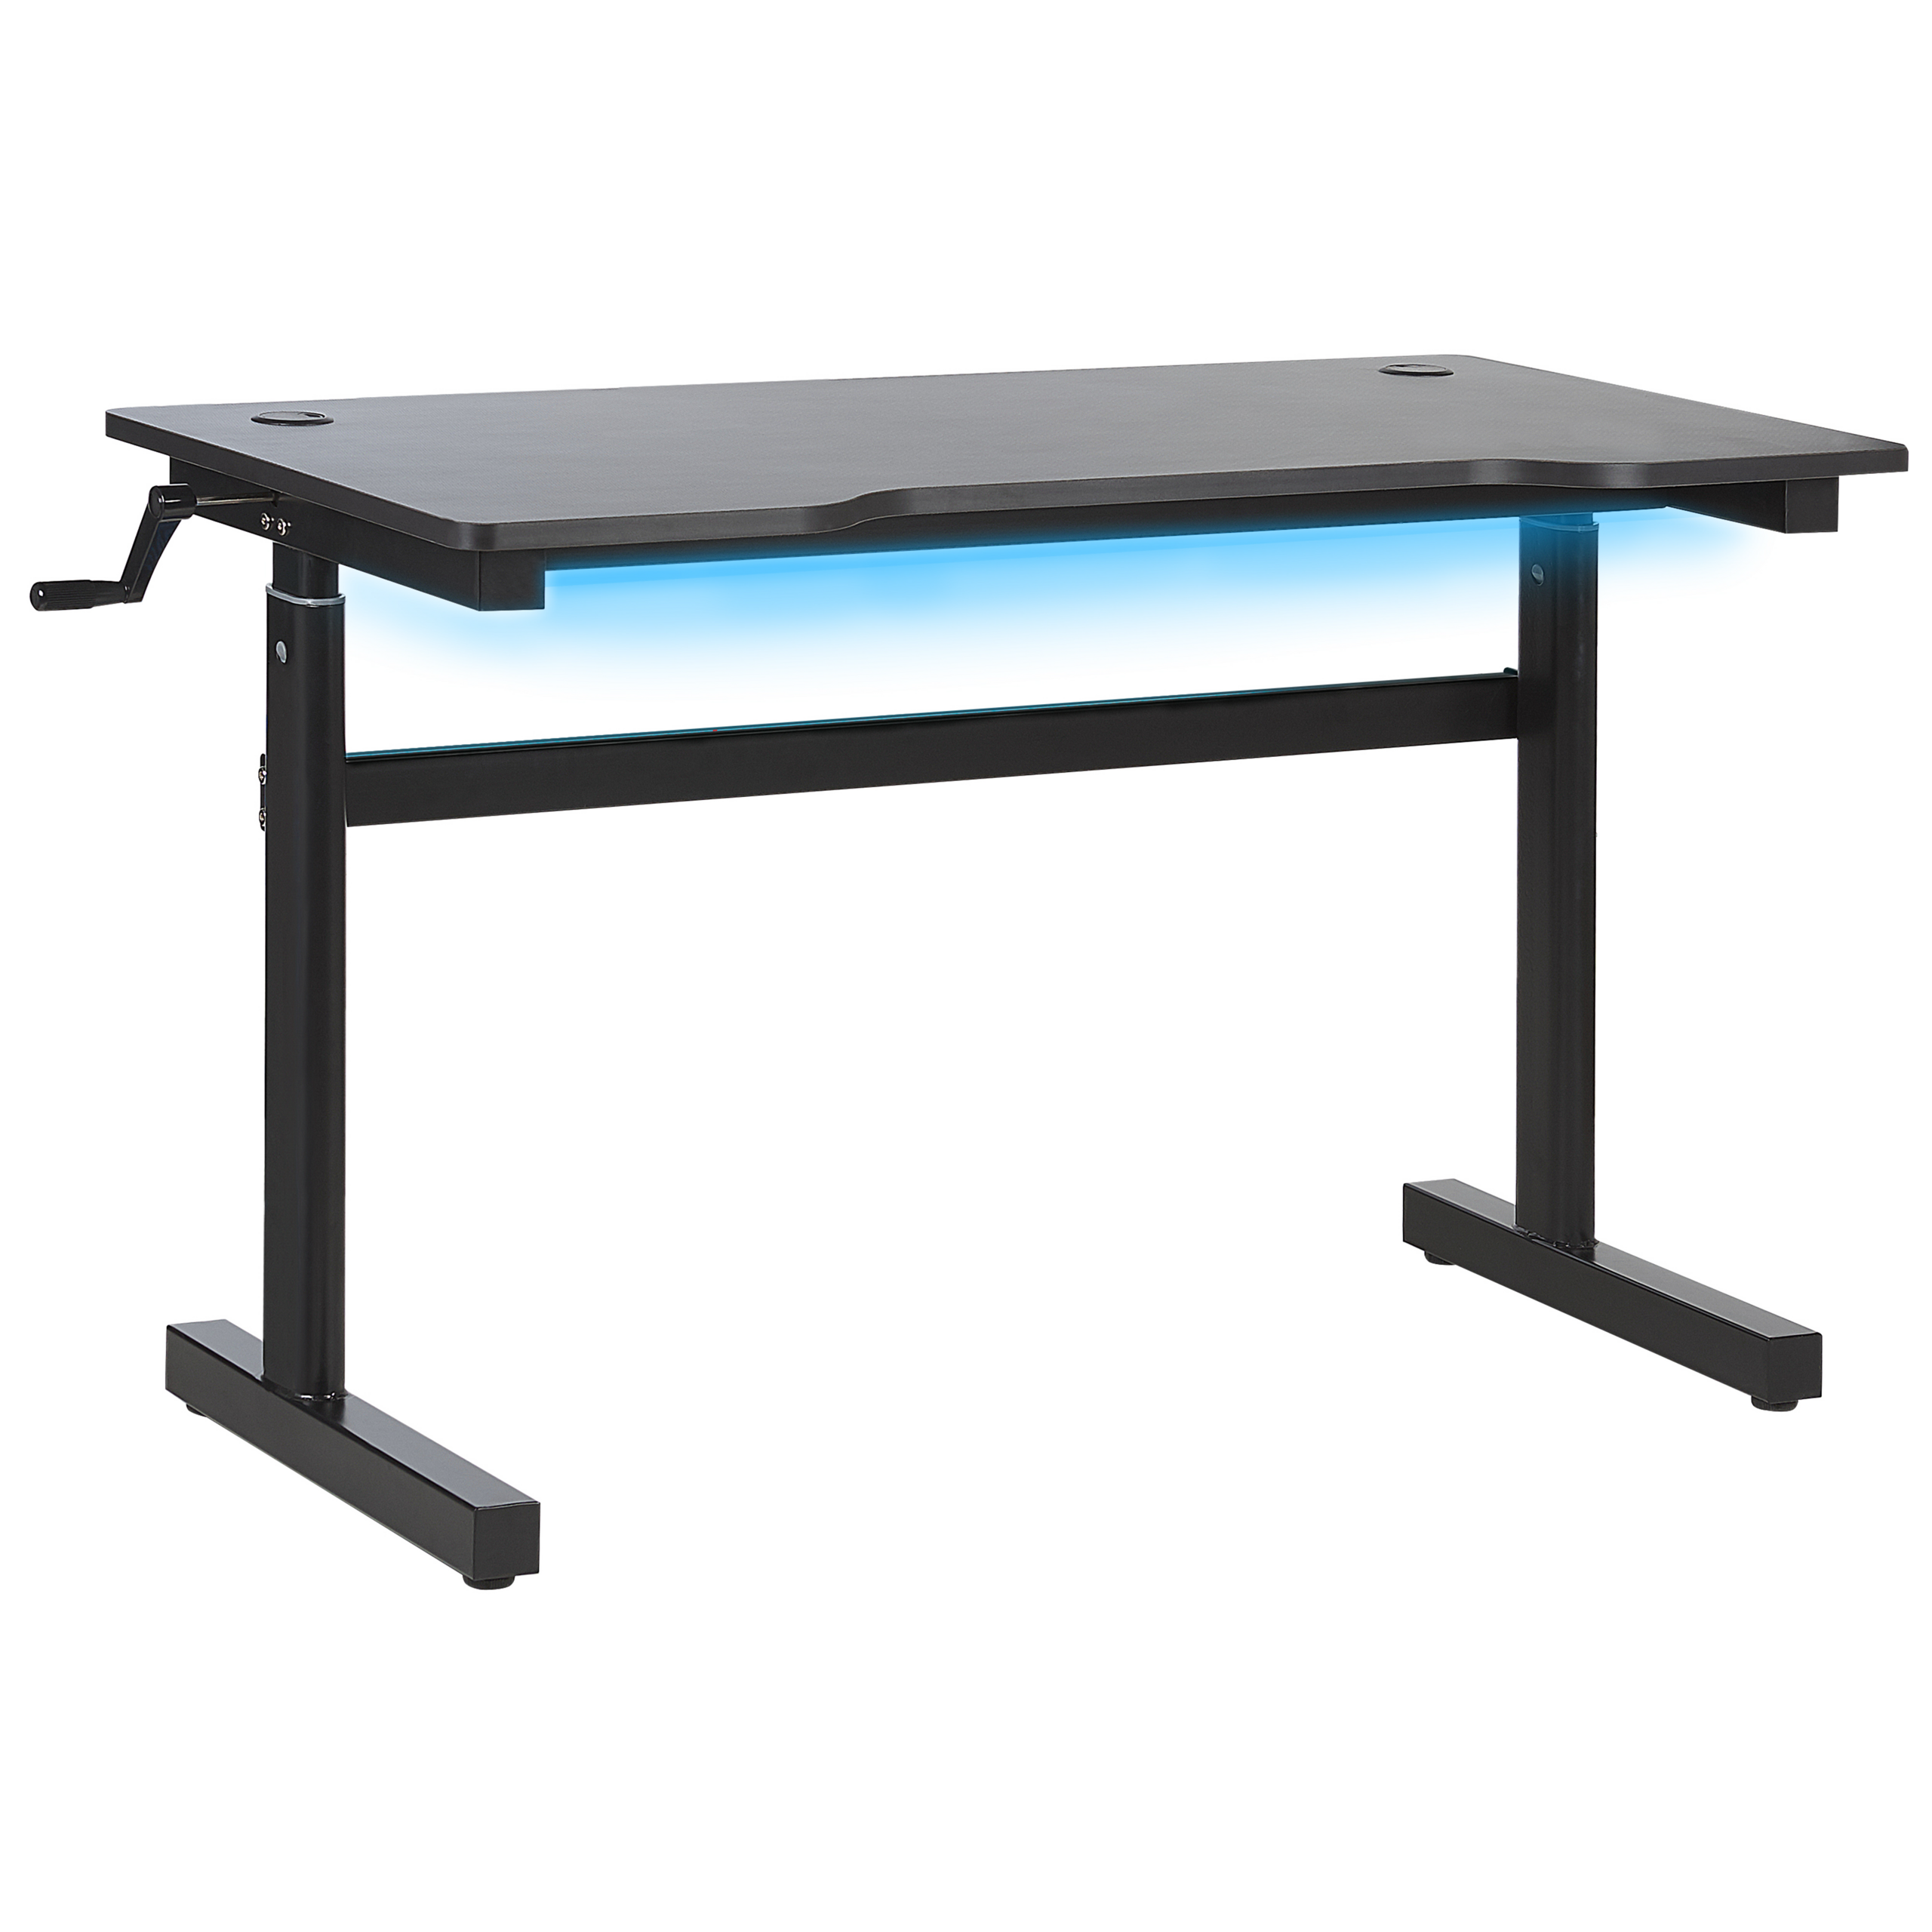 Beliani Adjustable gaming Desk Black MDF Metal Legs Rectangular 120 x 60 cm with RGB Lights Modern Design Home Office Furniture